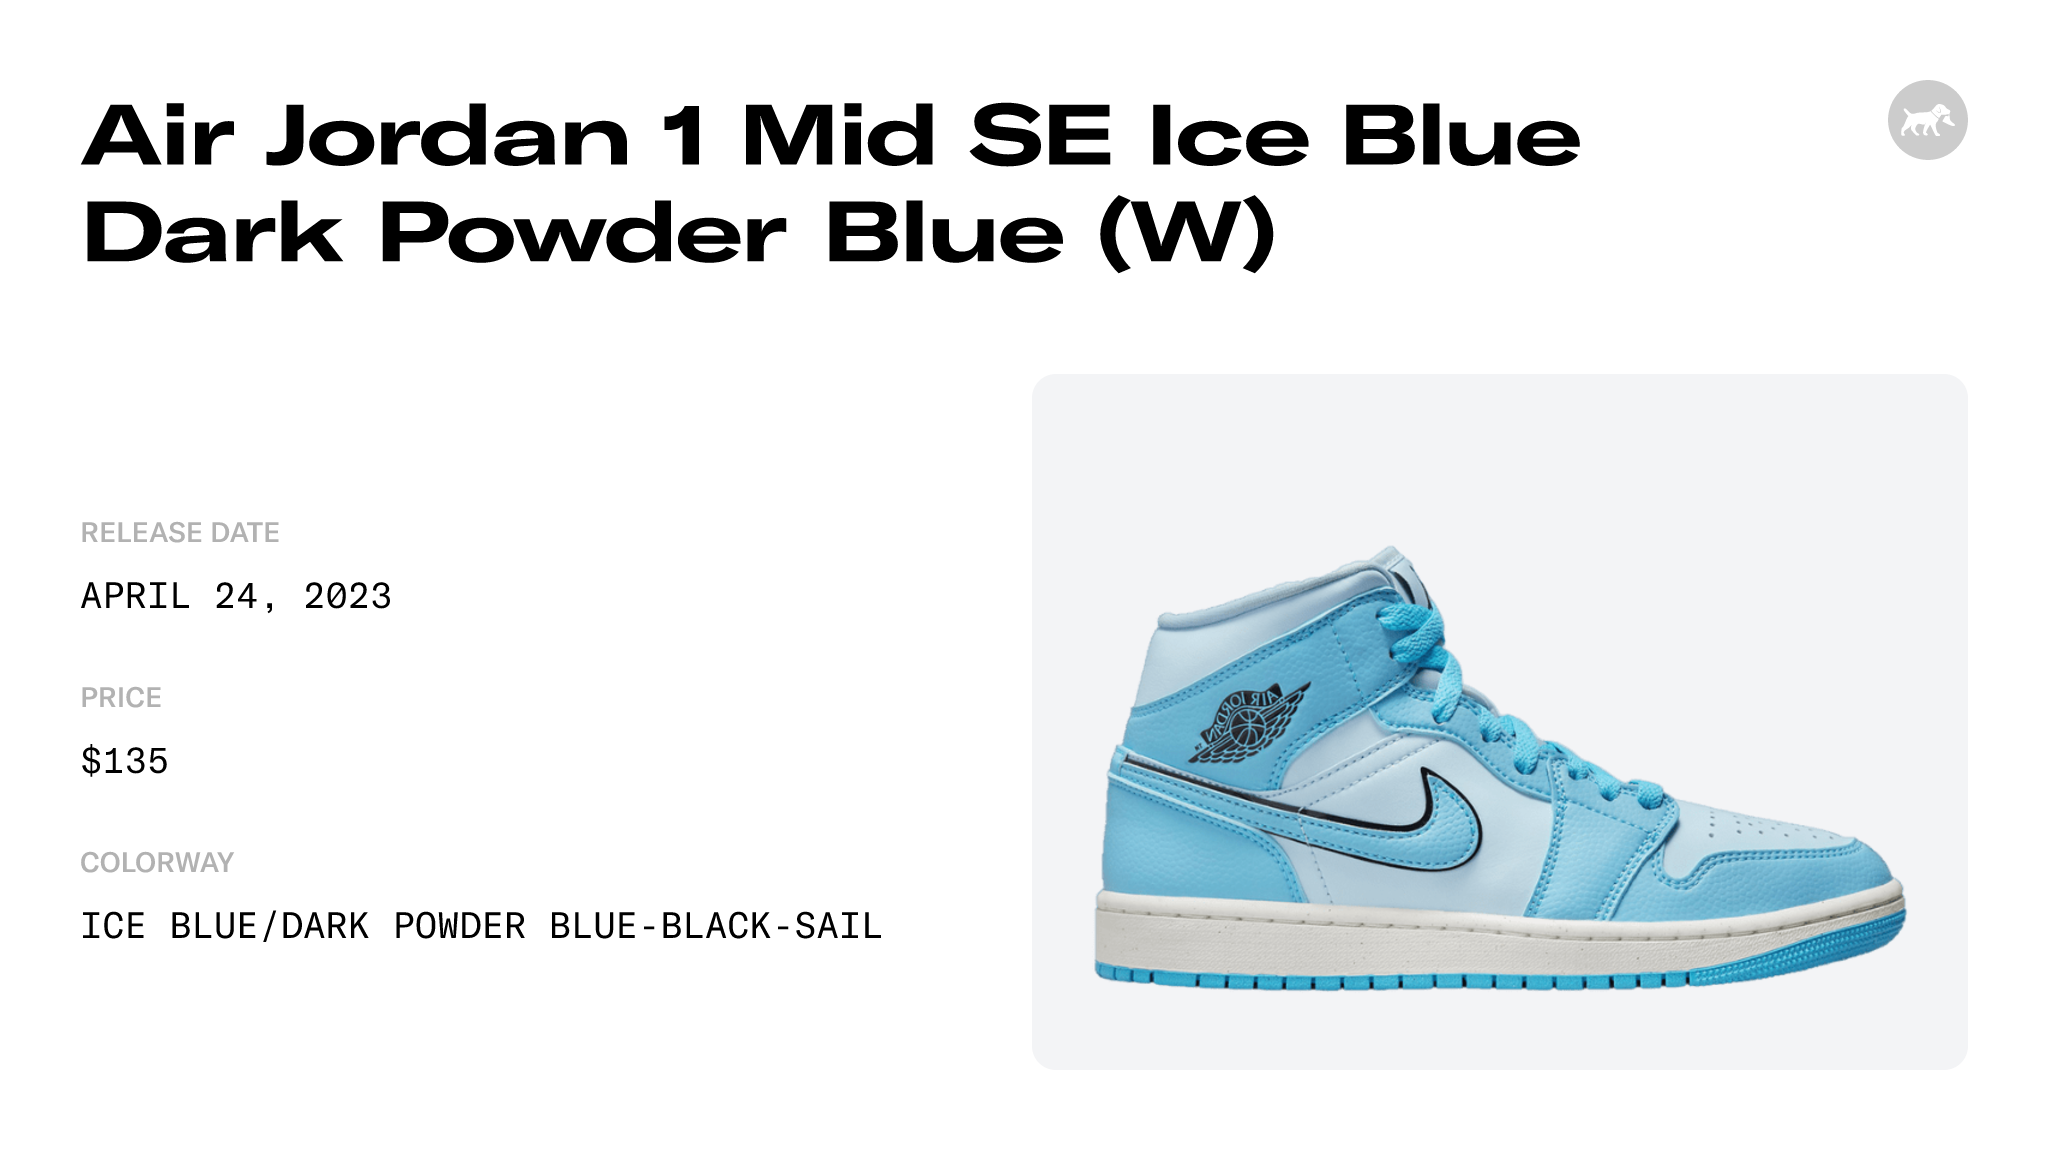 Jordan Air Jordan 1 Mid SE Ice Blue / Black / Sail / Dark Powder